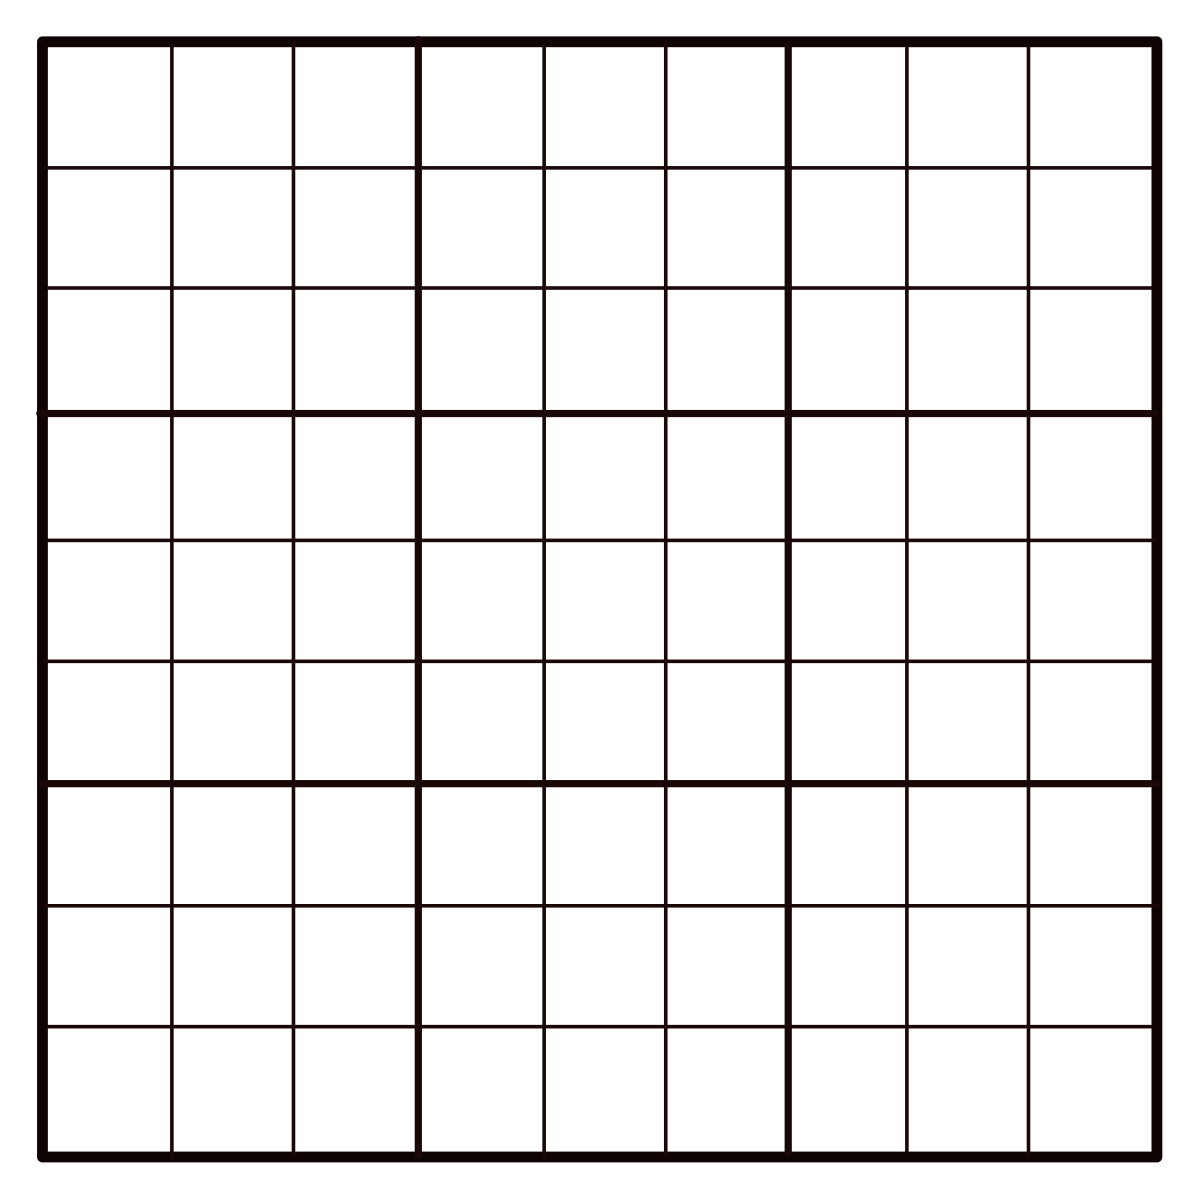 Empty Sudoku Grid Printable